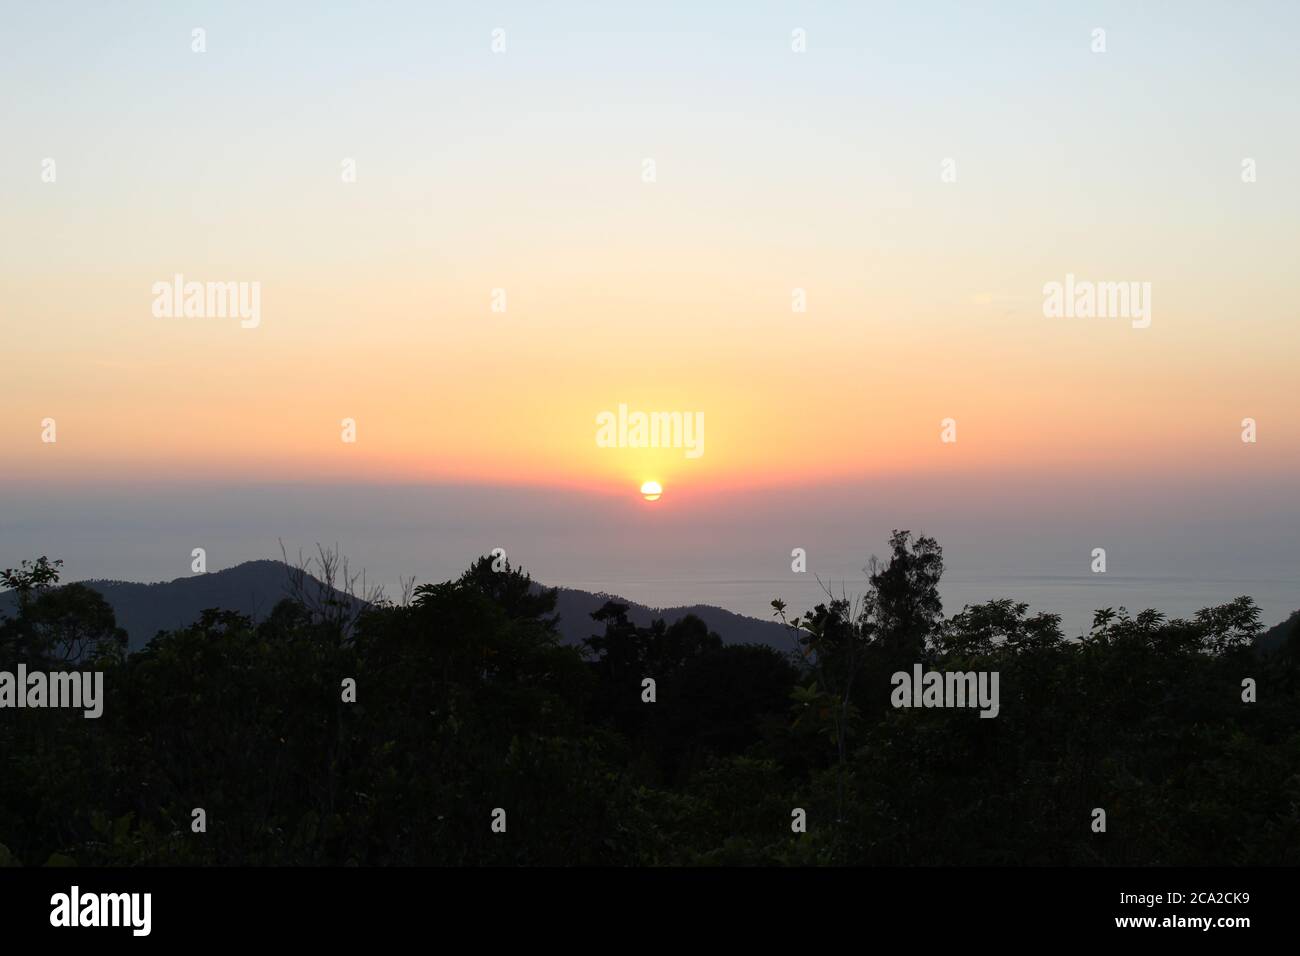 Fotos des Sonnenuntergangs an verschiedenen Orten. Stockfoto